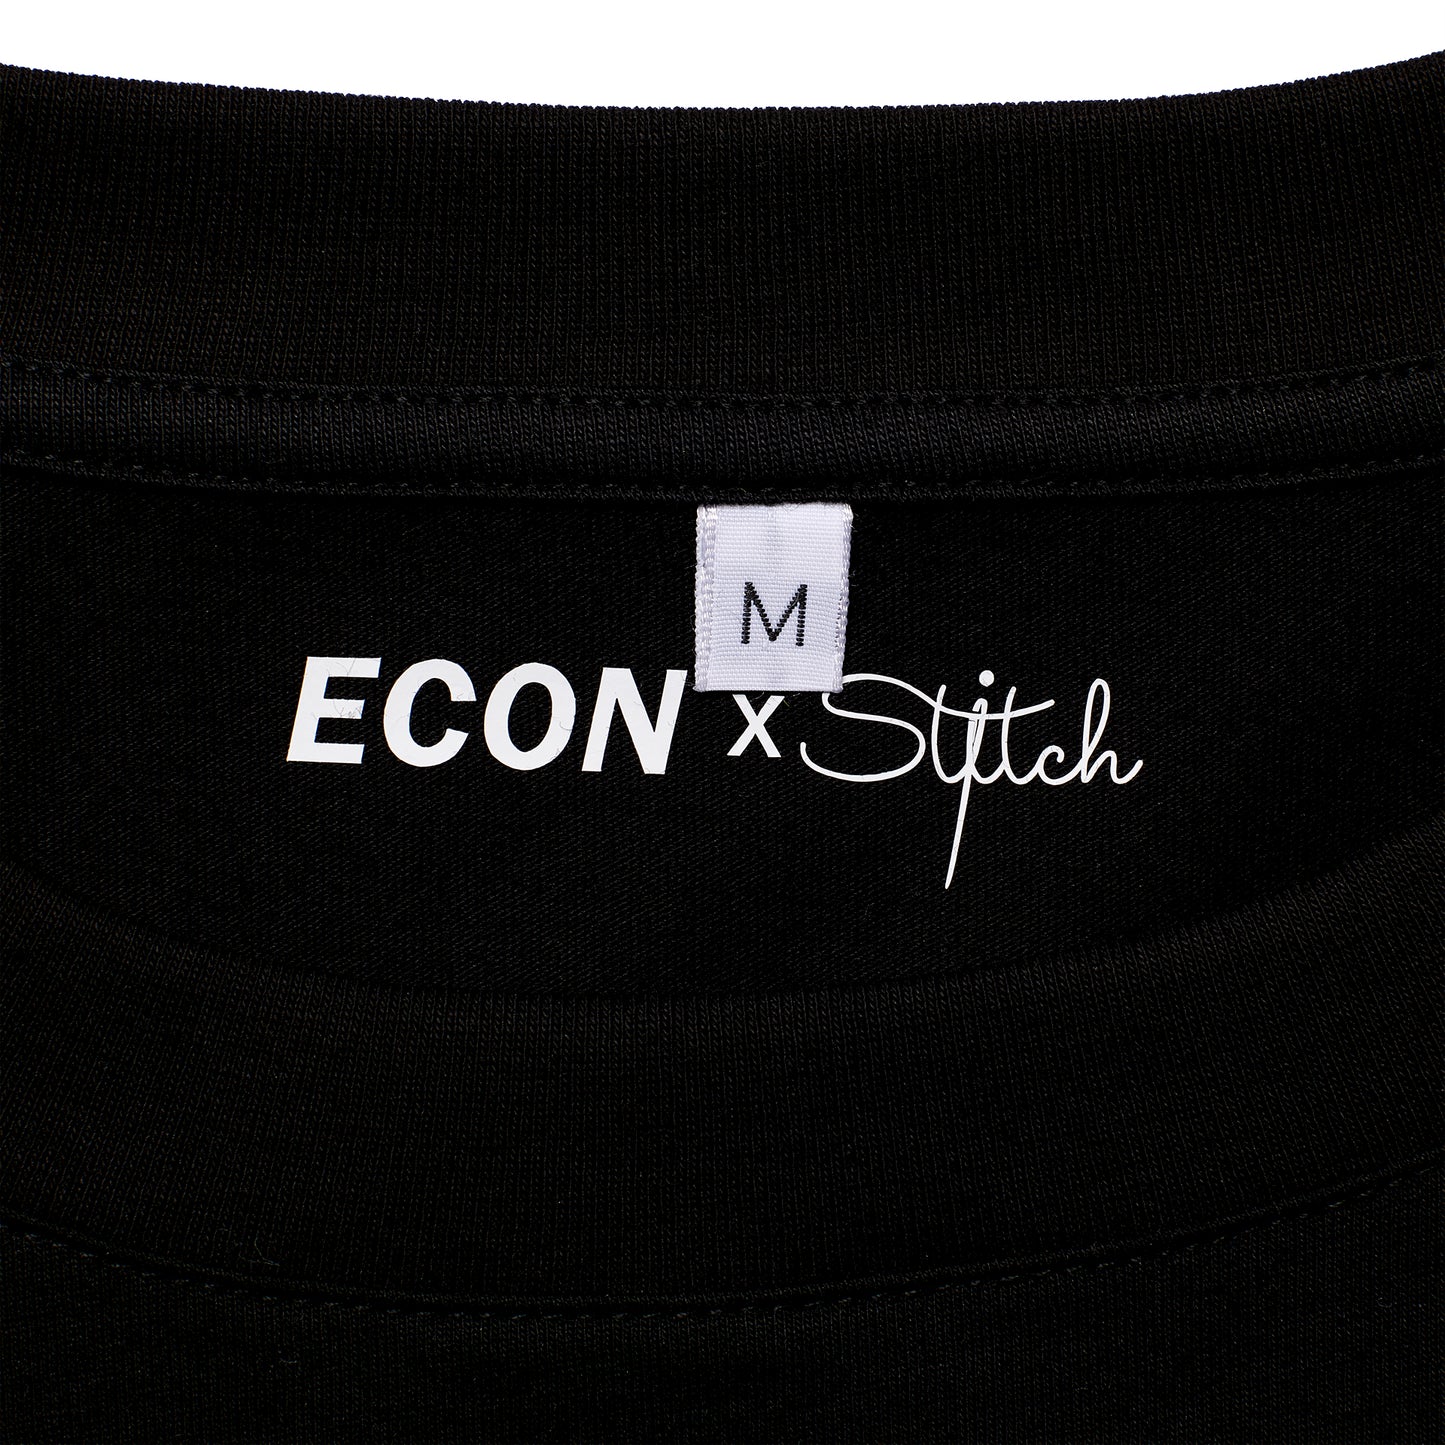 The Econ x Stitch black